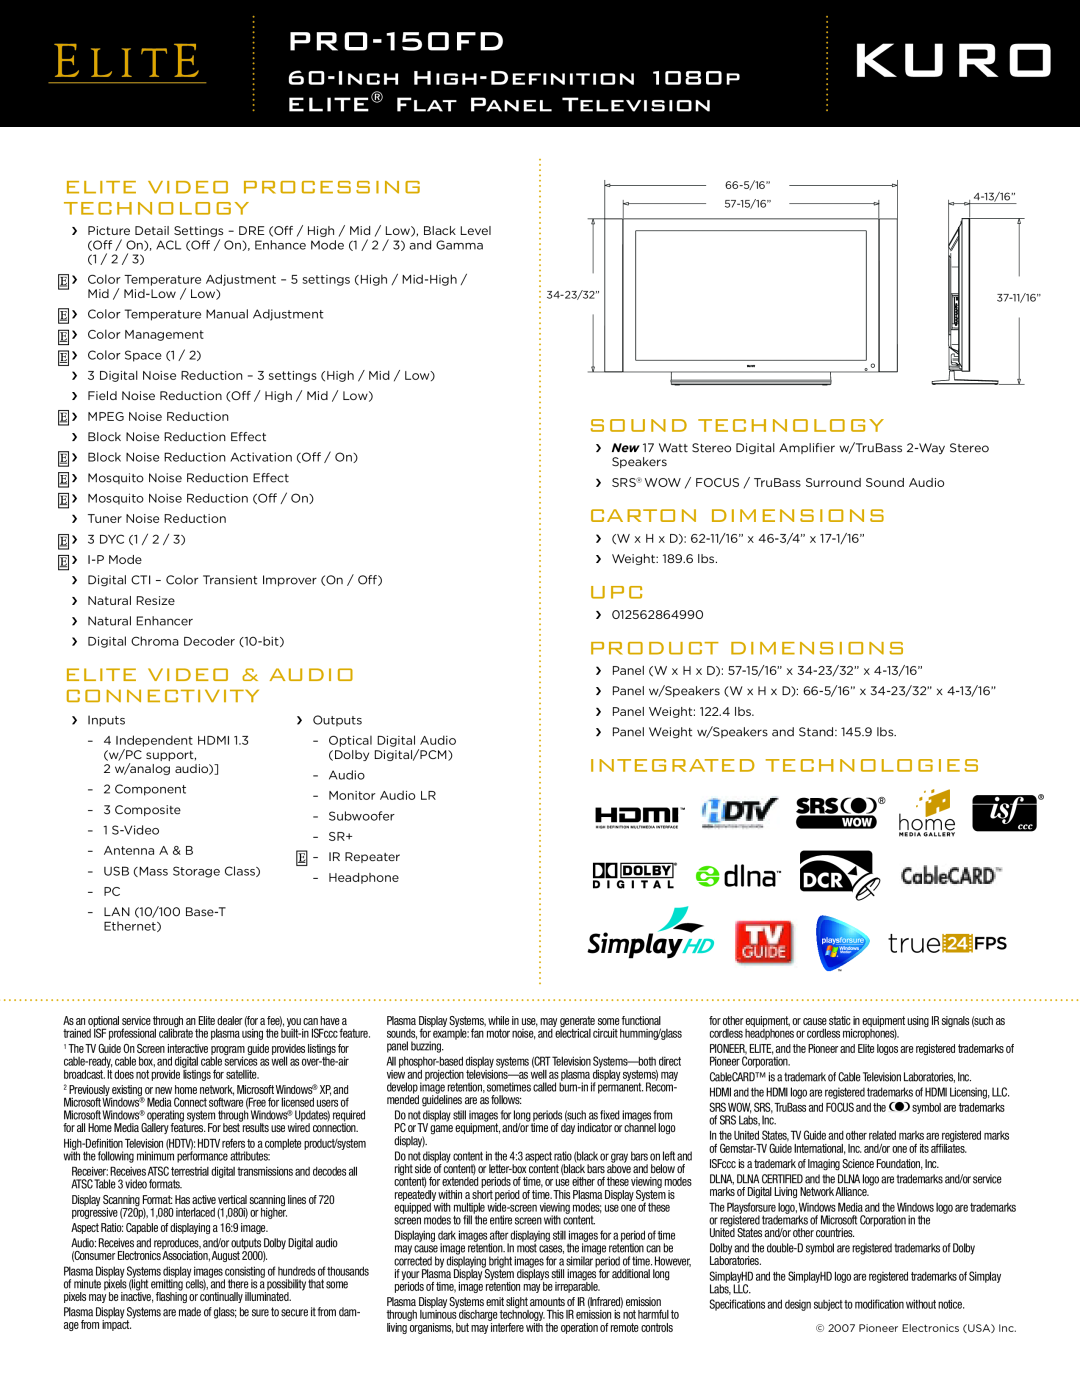 Pioneer PRO 150FD manual Elite Video Processing, Elite Video & Audio, Sound Technology, Connectivity, Carton Dimensions 